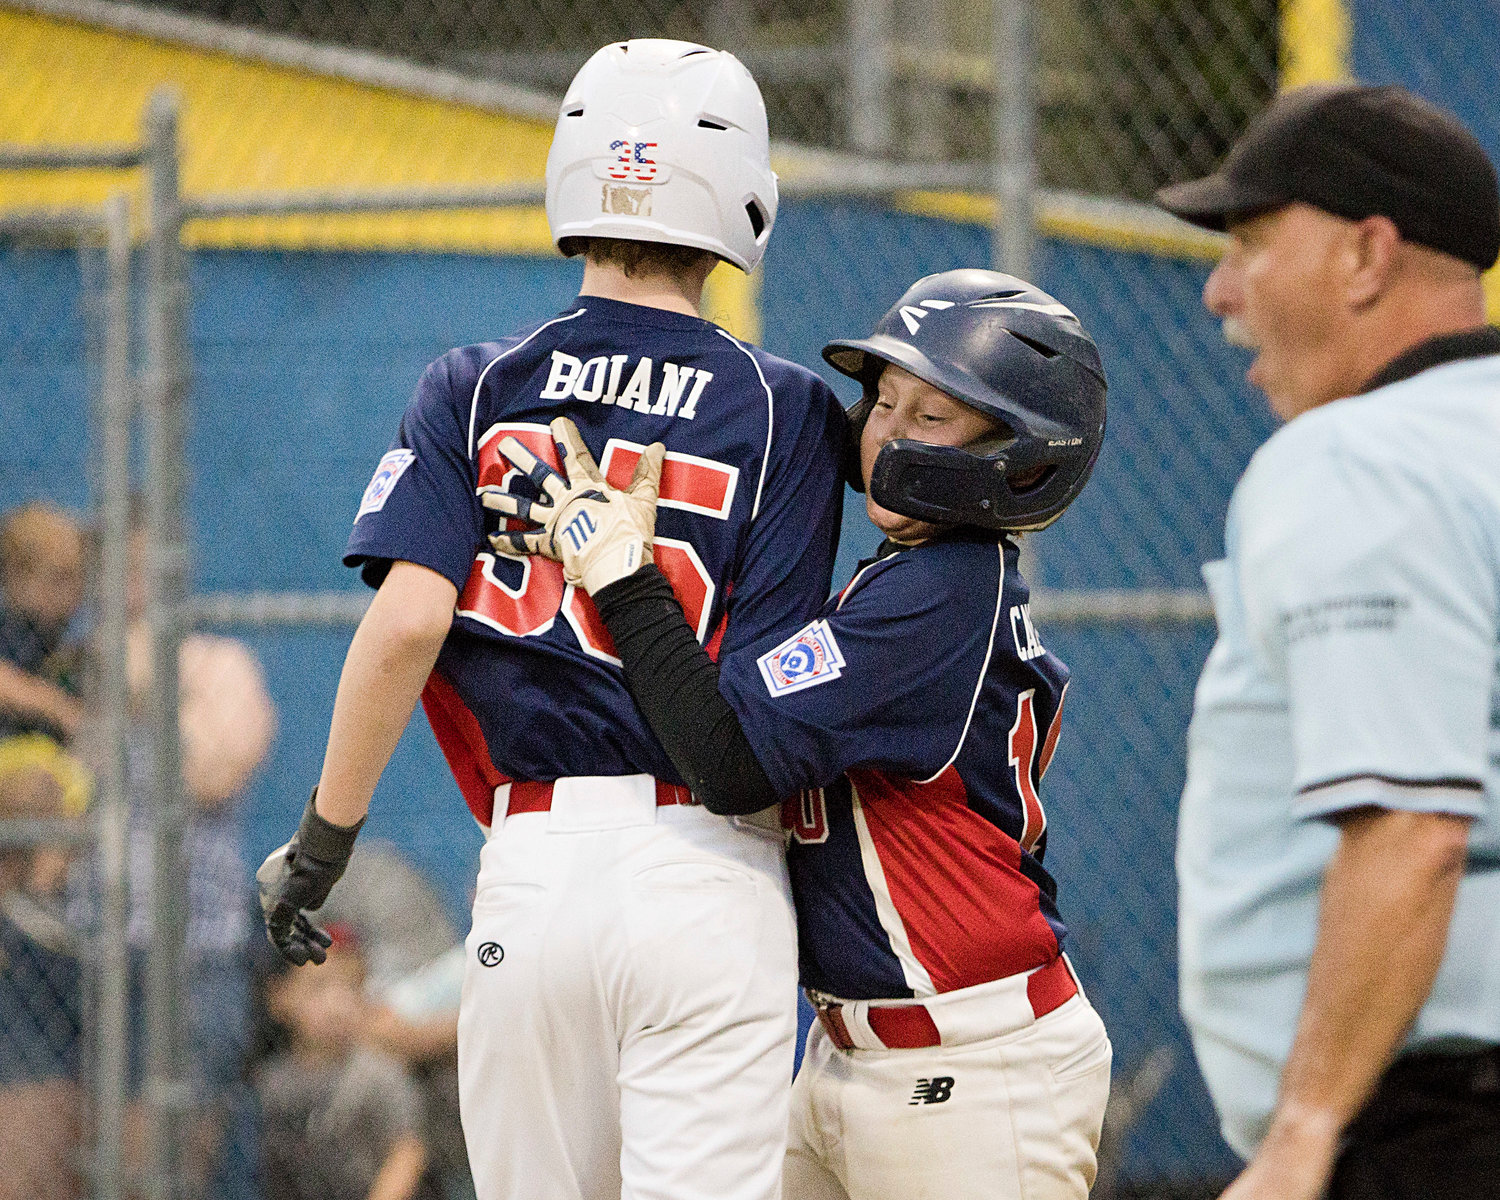 Ryan Campion (right) hugs Tyler Boiani following the latter player’s two-run homer.